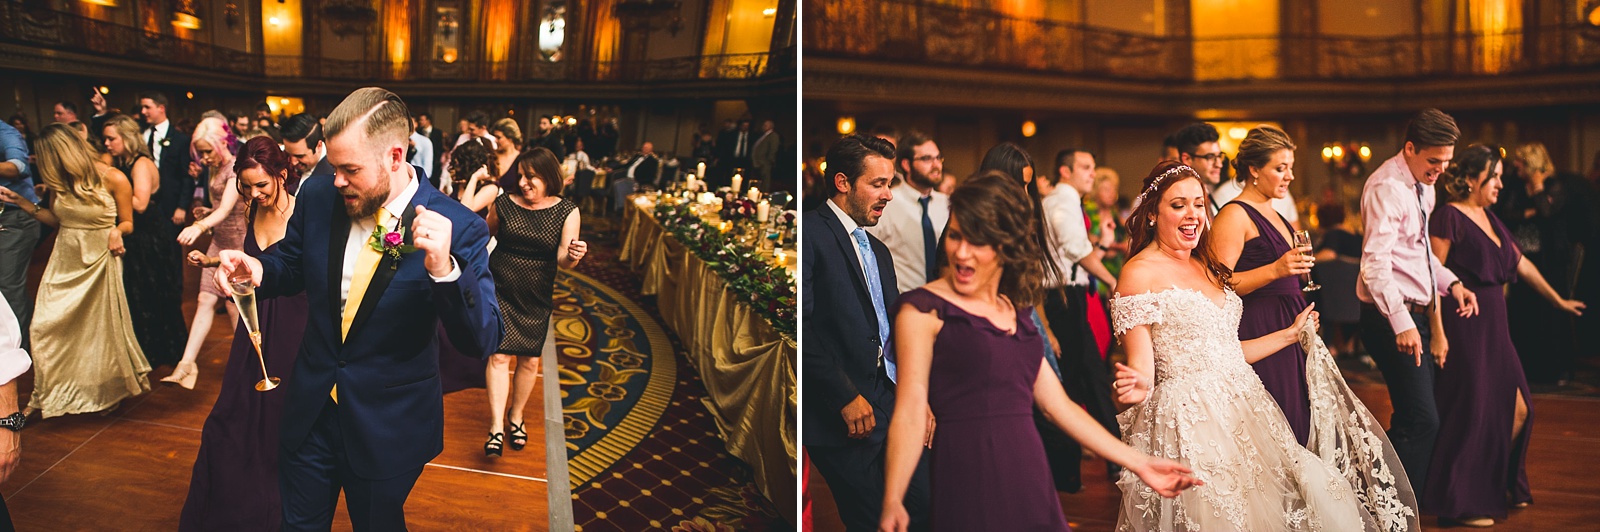 79 groom and bride dancing at wedding reception - Hilton Chicago Wedding Photographer // Sarah + Aaron